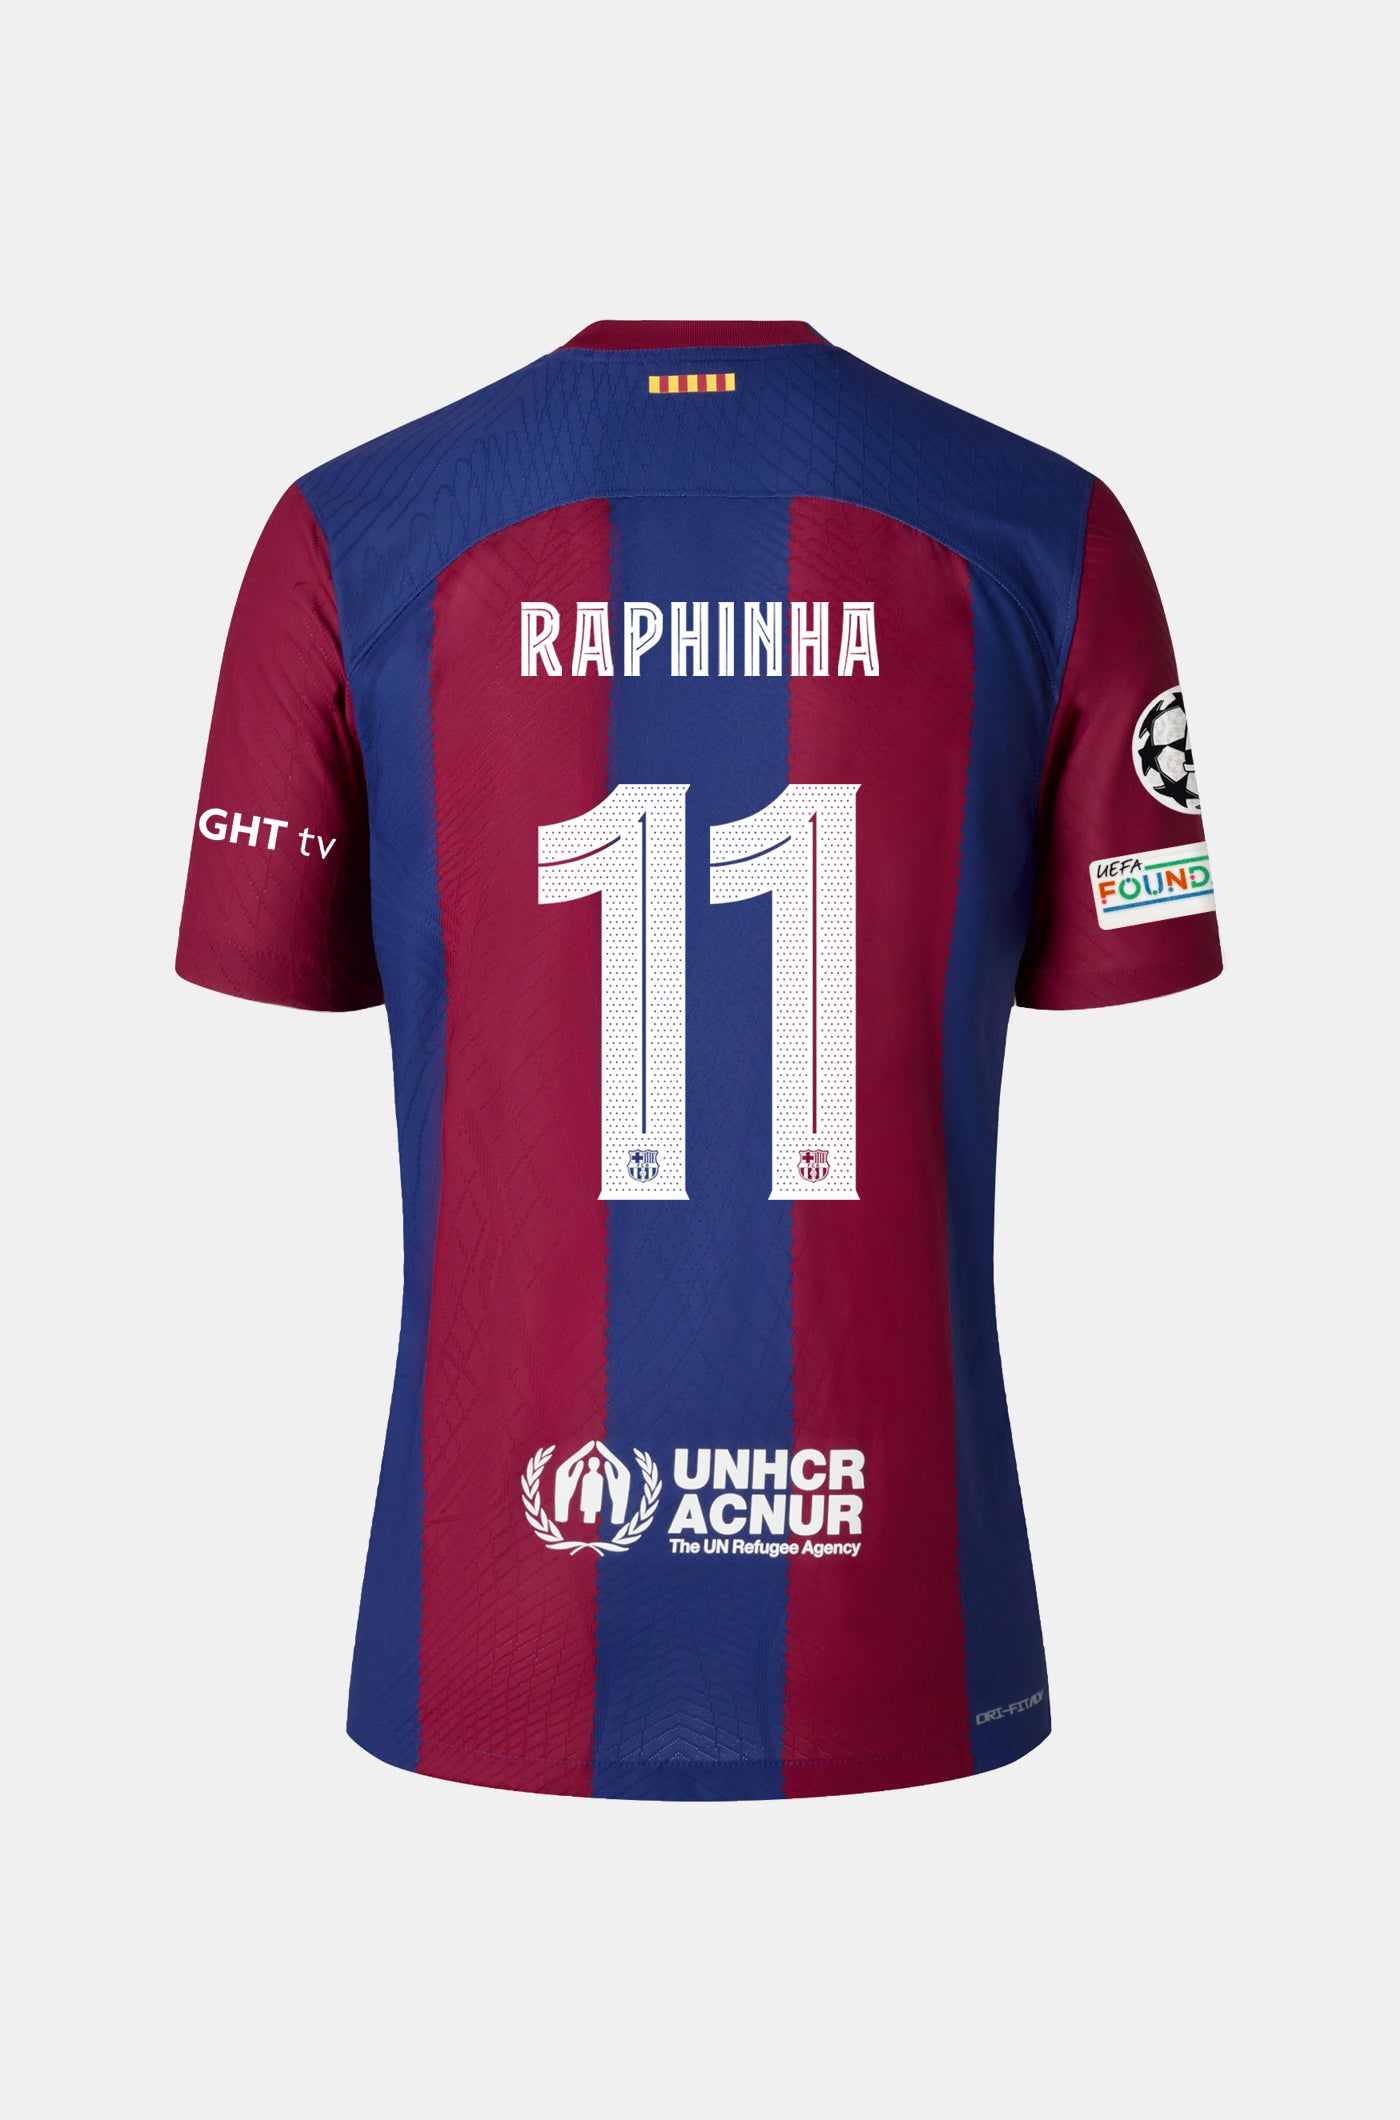 UCL FC Barcelona home shirt 23/24 - RAPHINHA